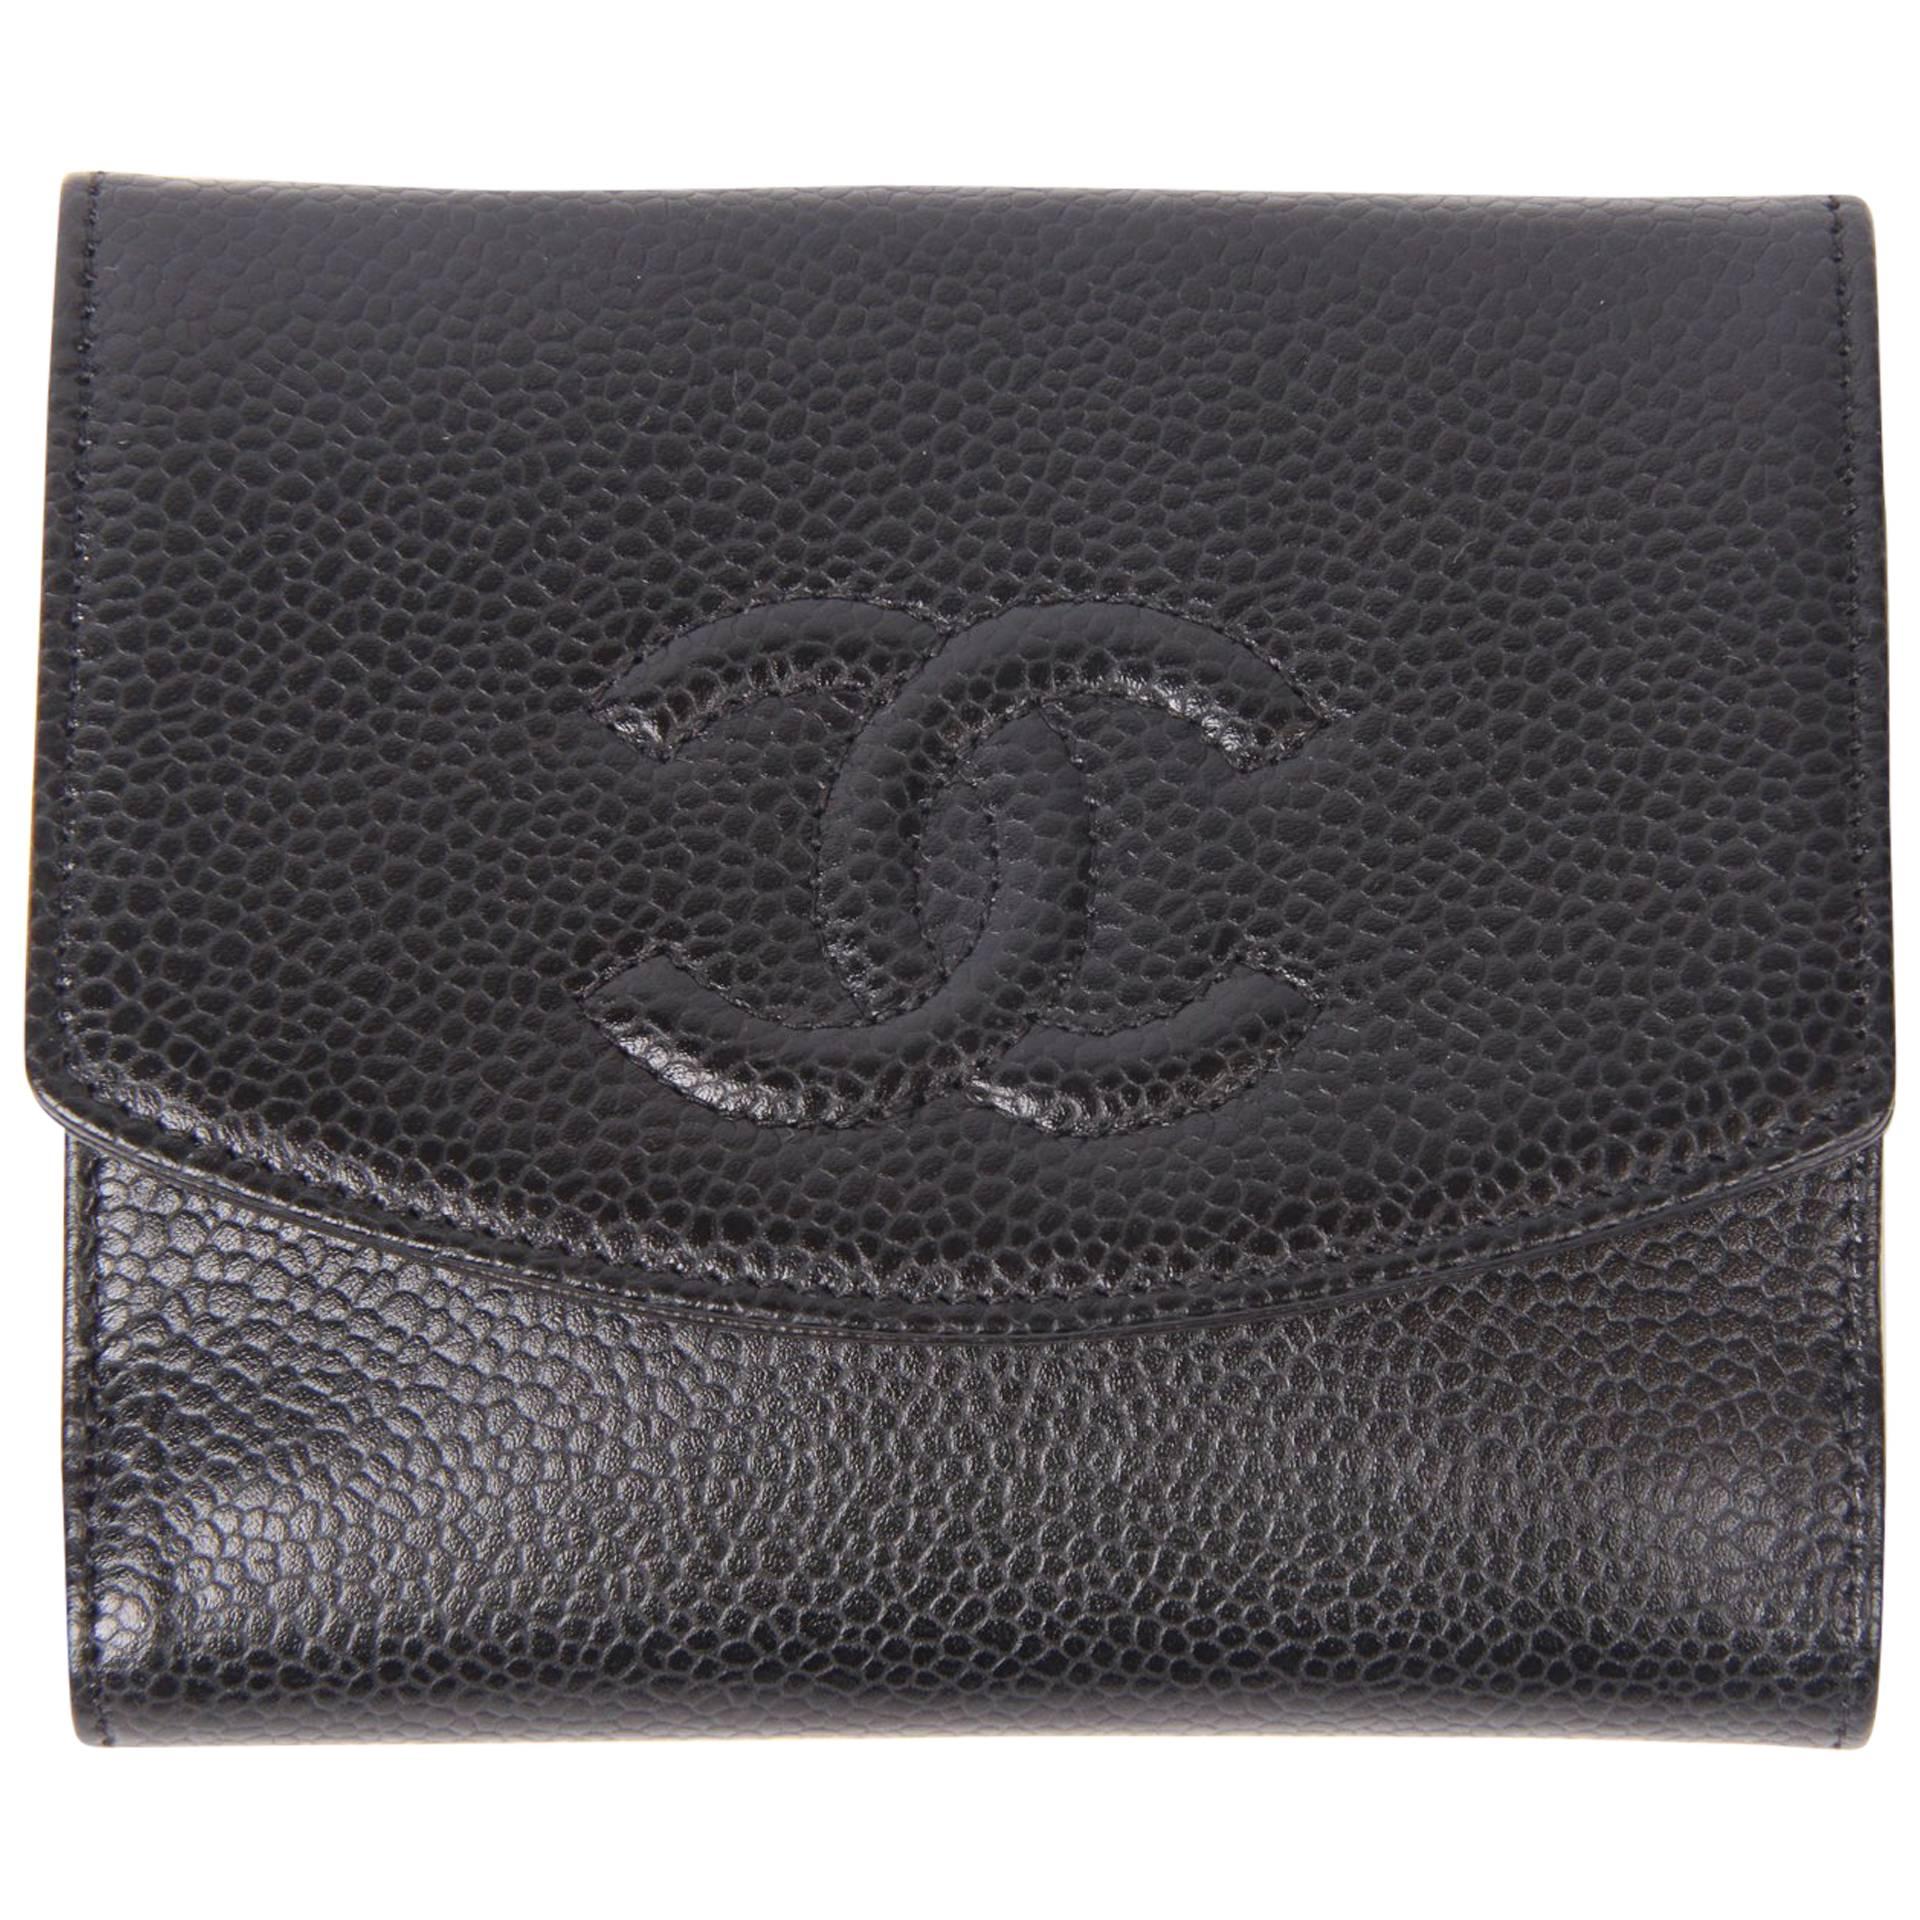 Chanel Caviar Leather CC Billfold Wallet - black 